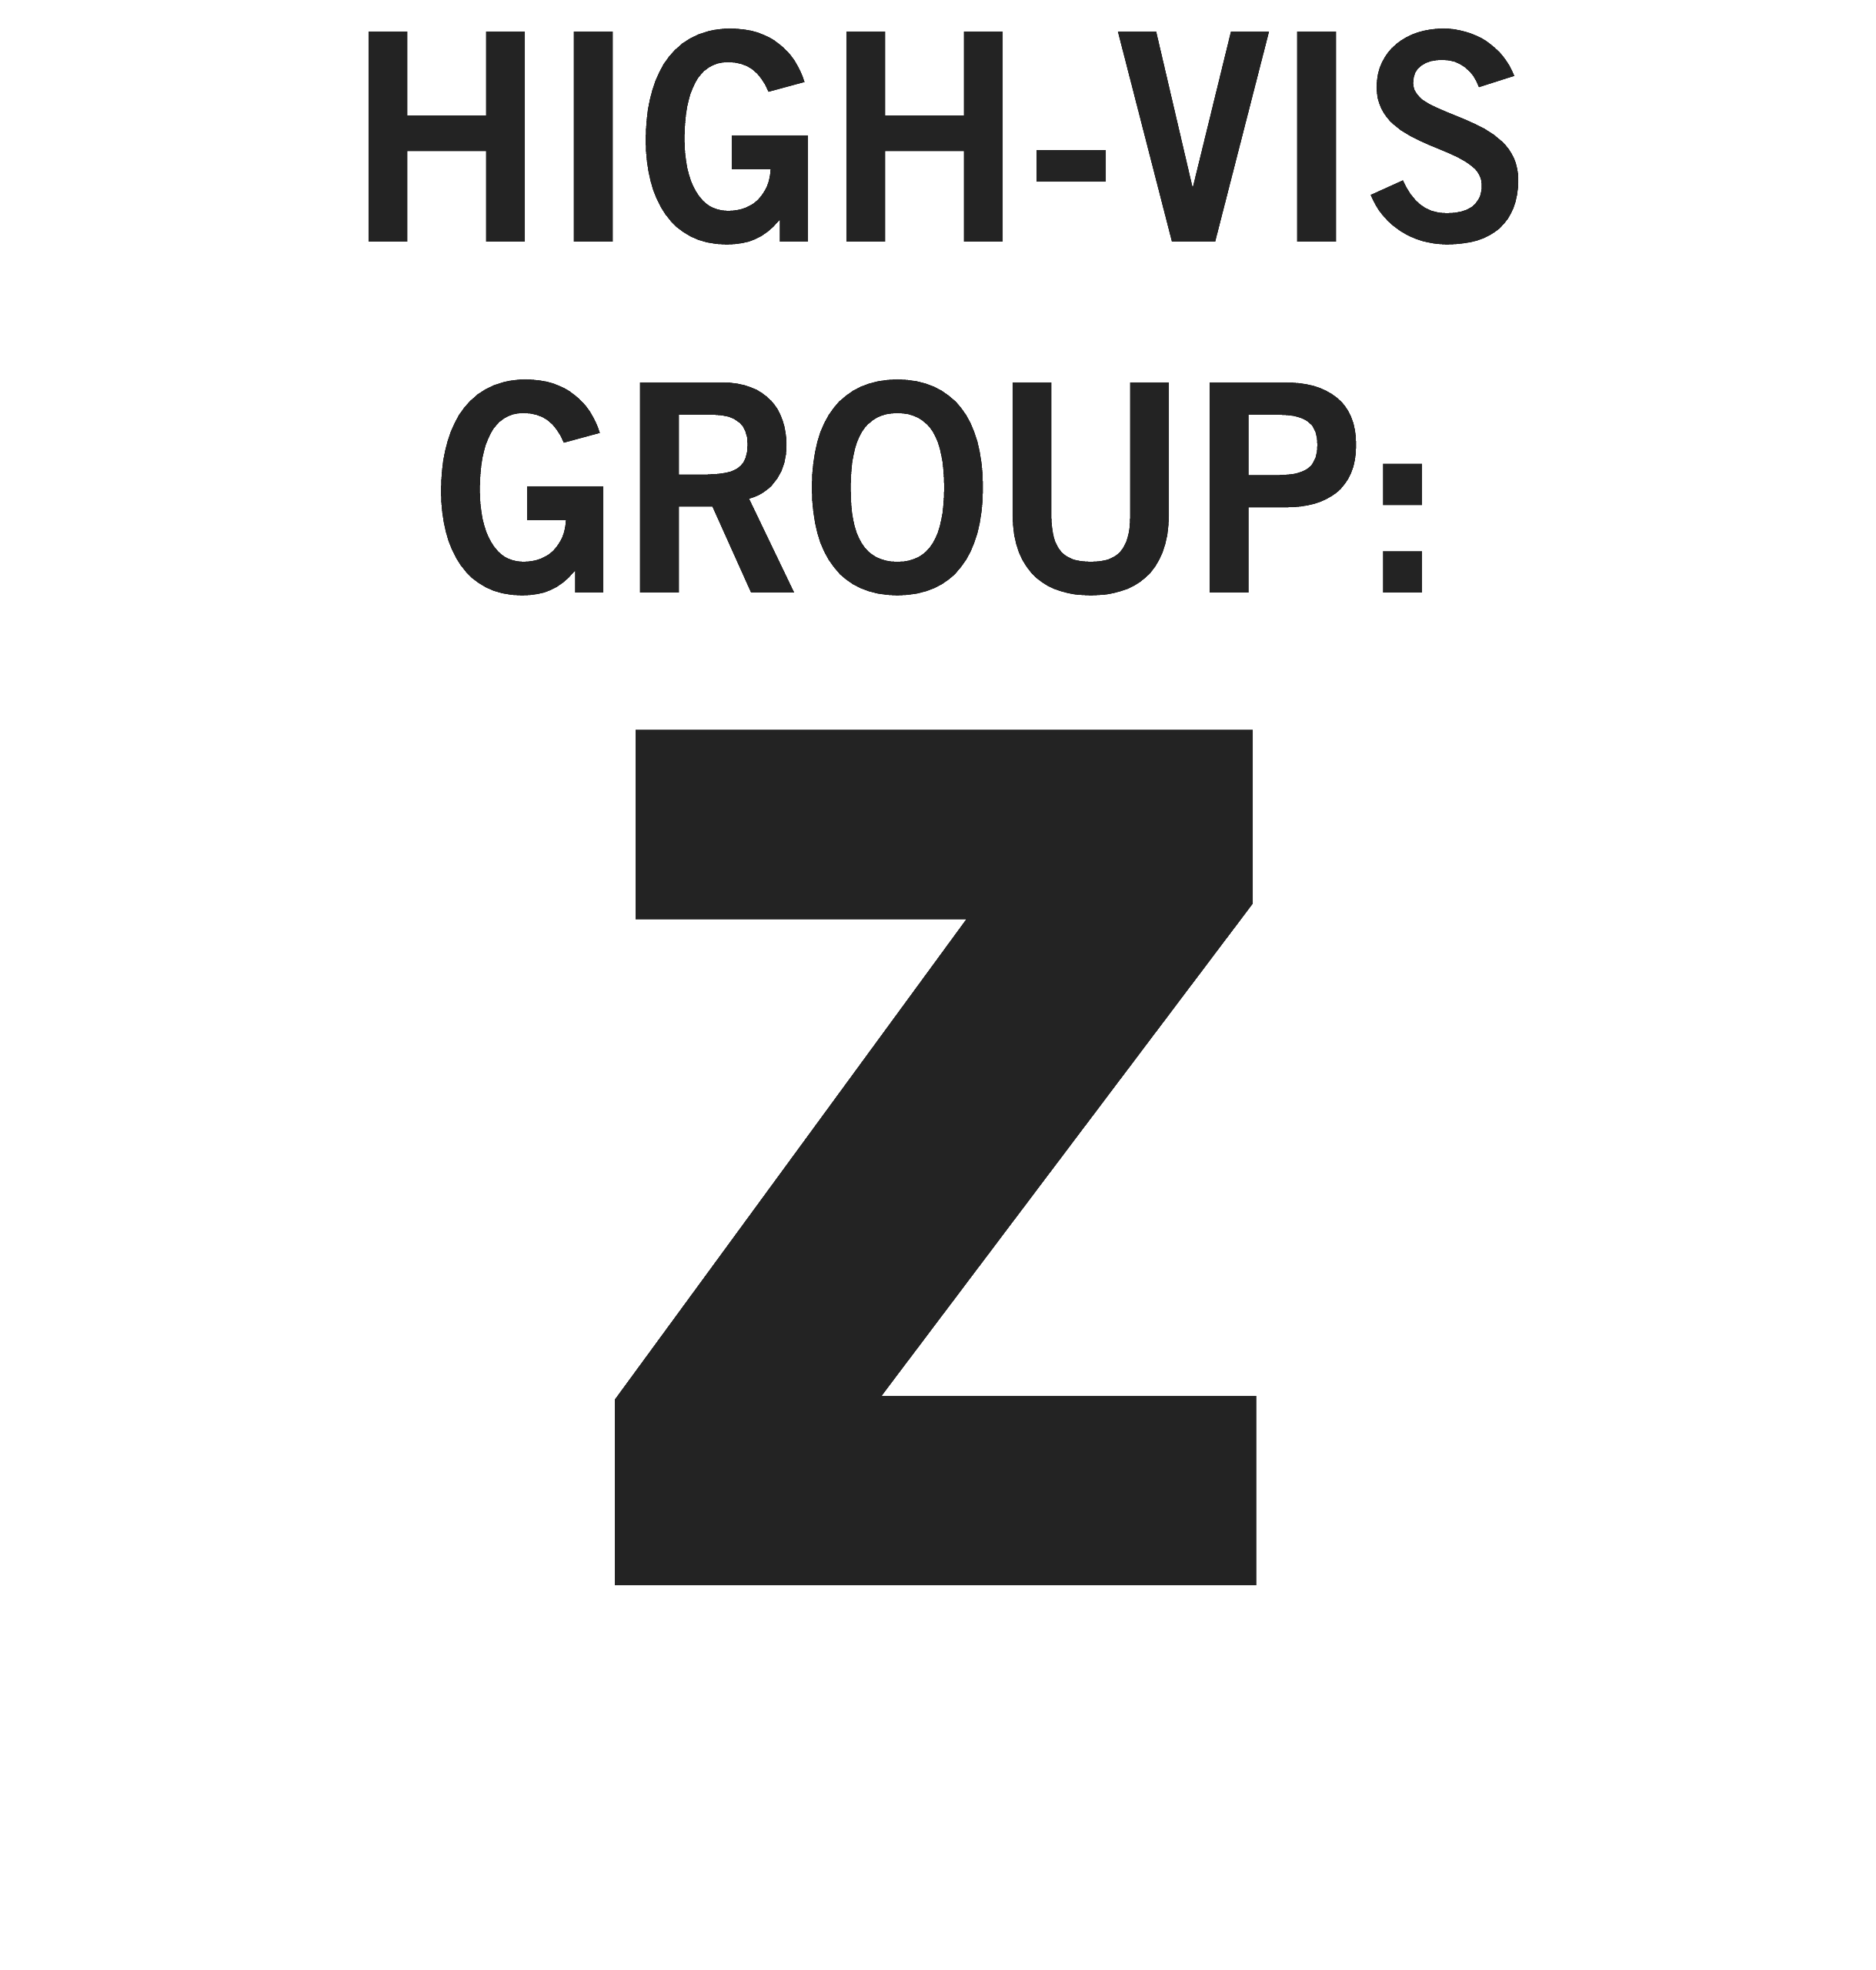 High-vis Group Z